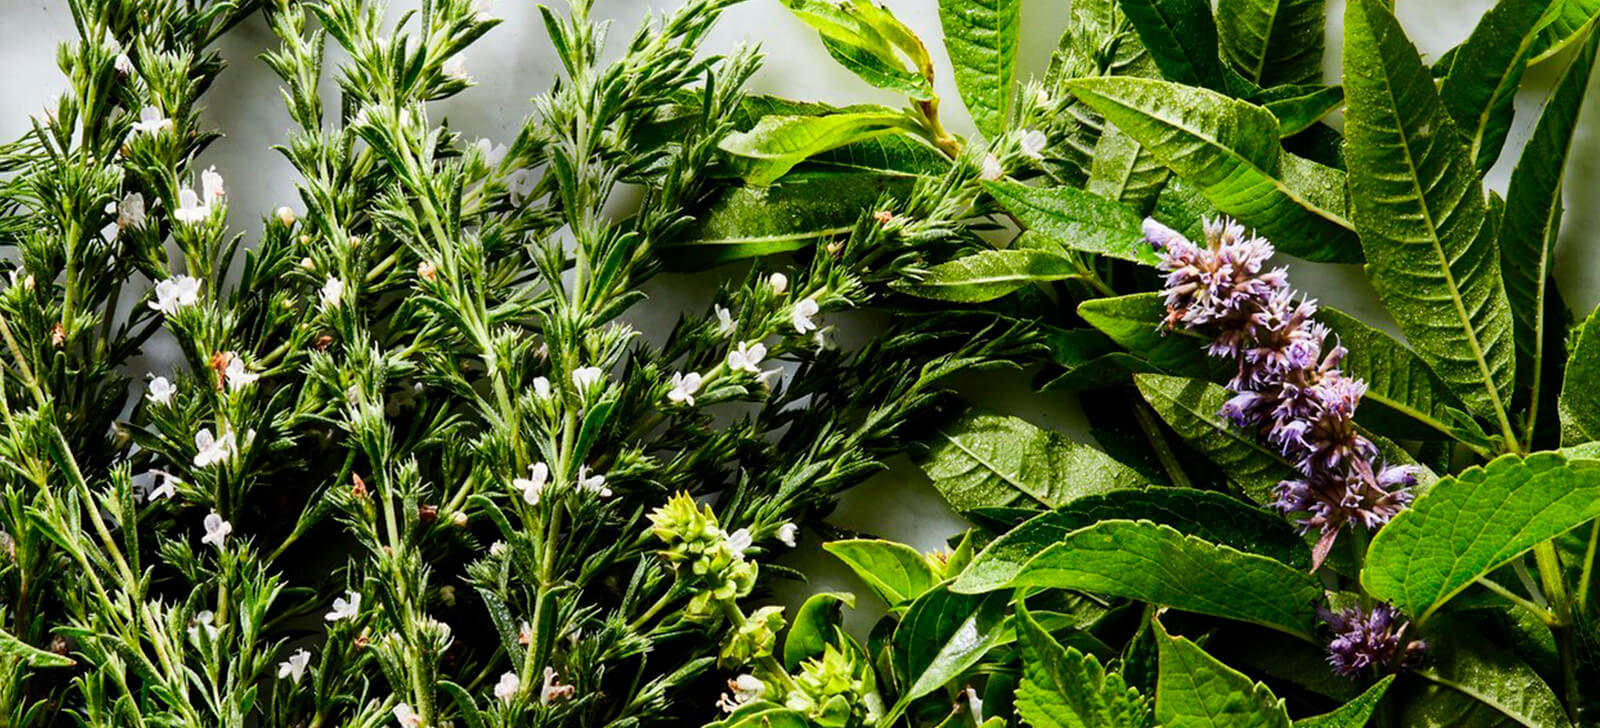 farmacia manipulacao campinas nova natural blog natureza magistral banho de ervas para hidratar o corpo